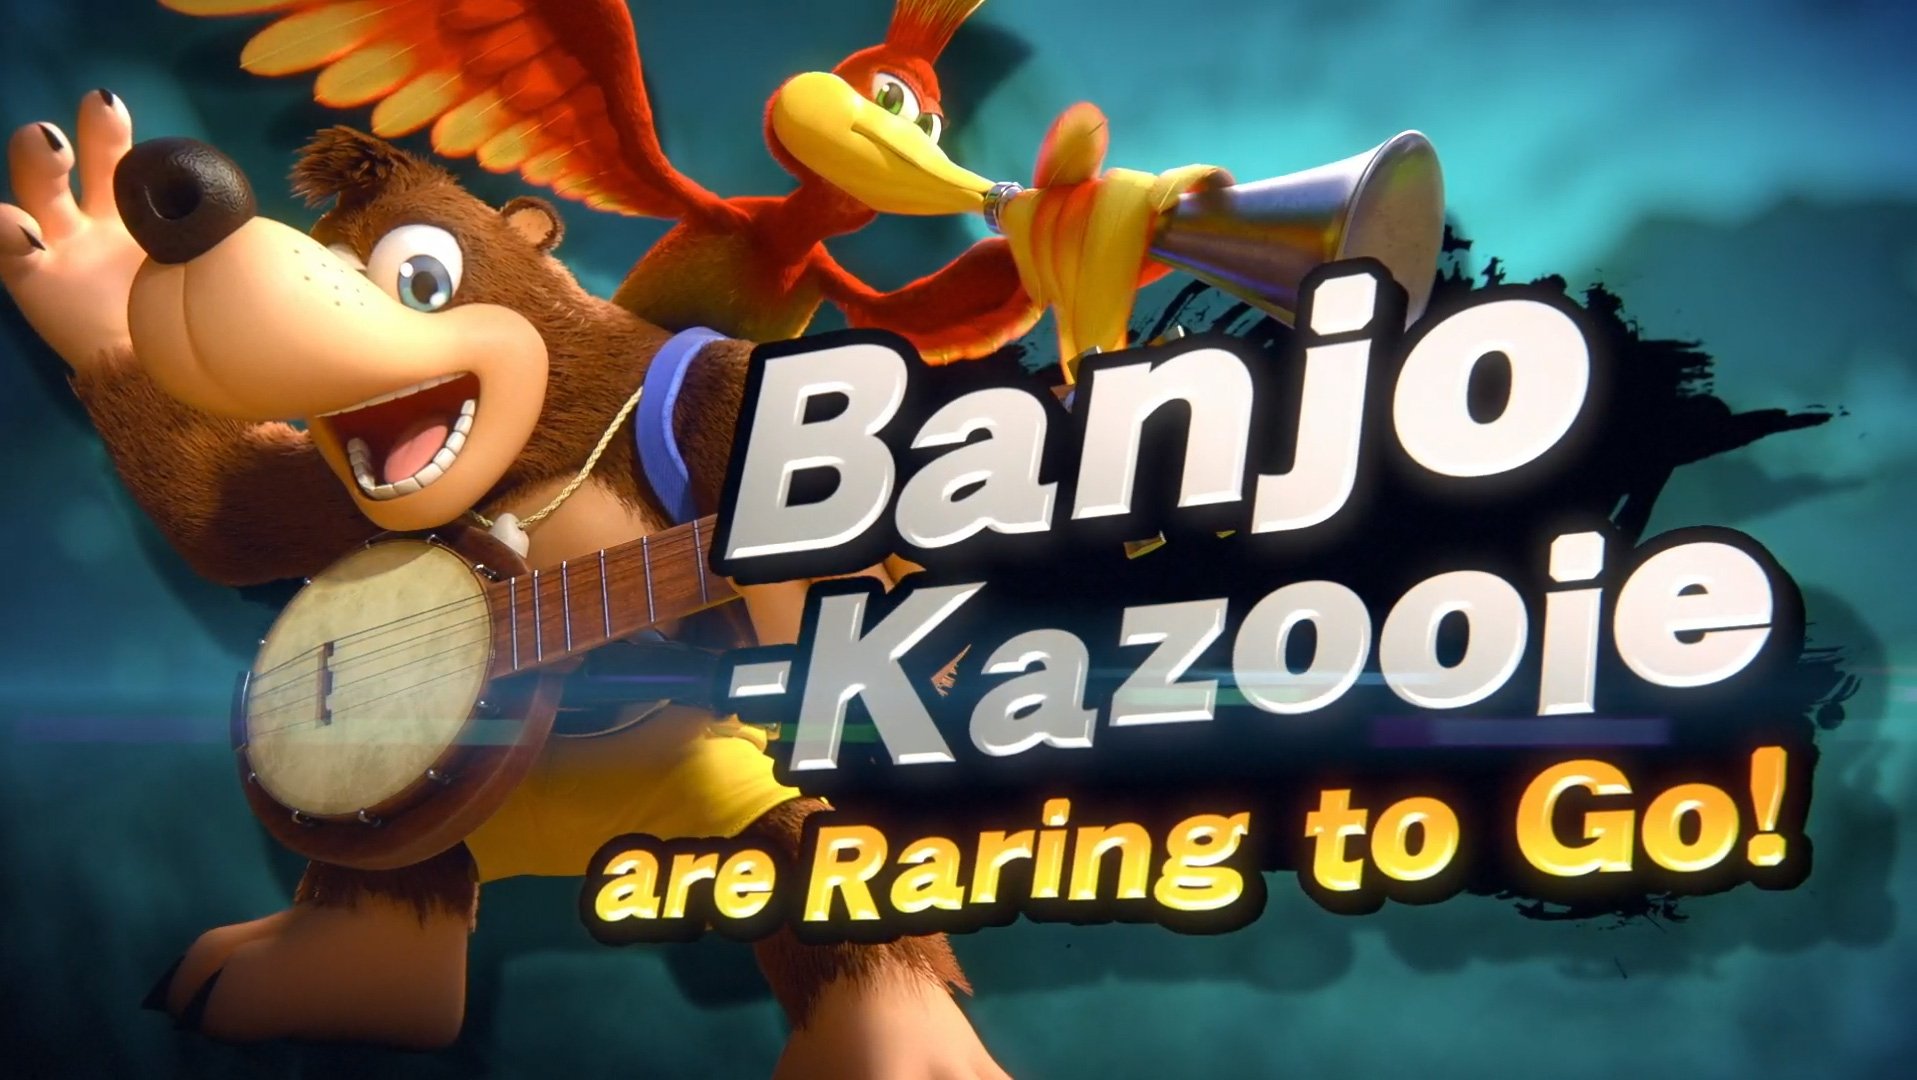 Banjo-Kazooie New Horizons (2020)